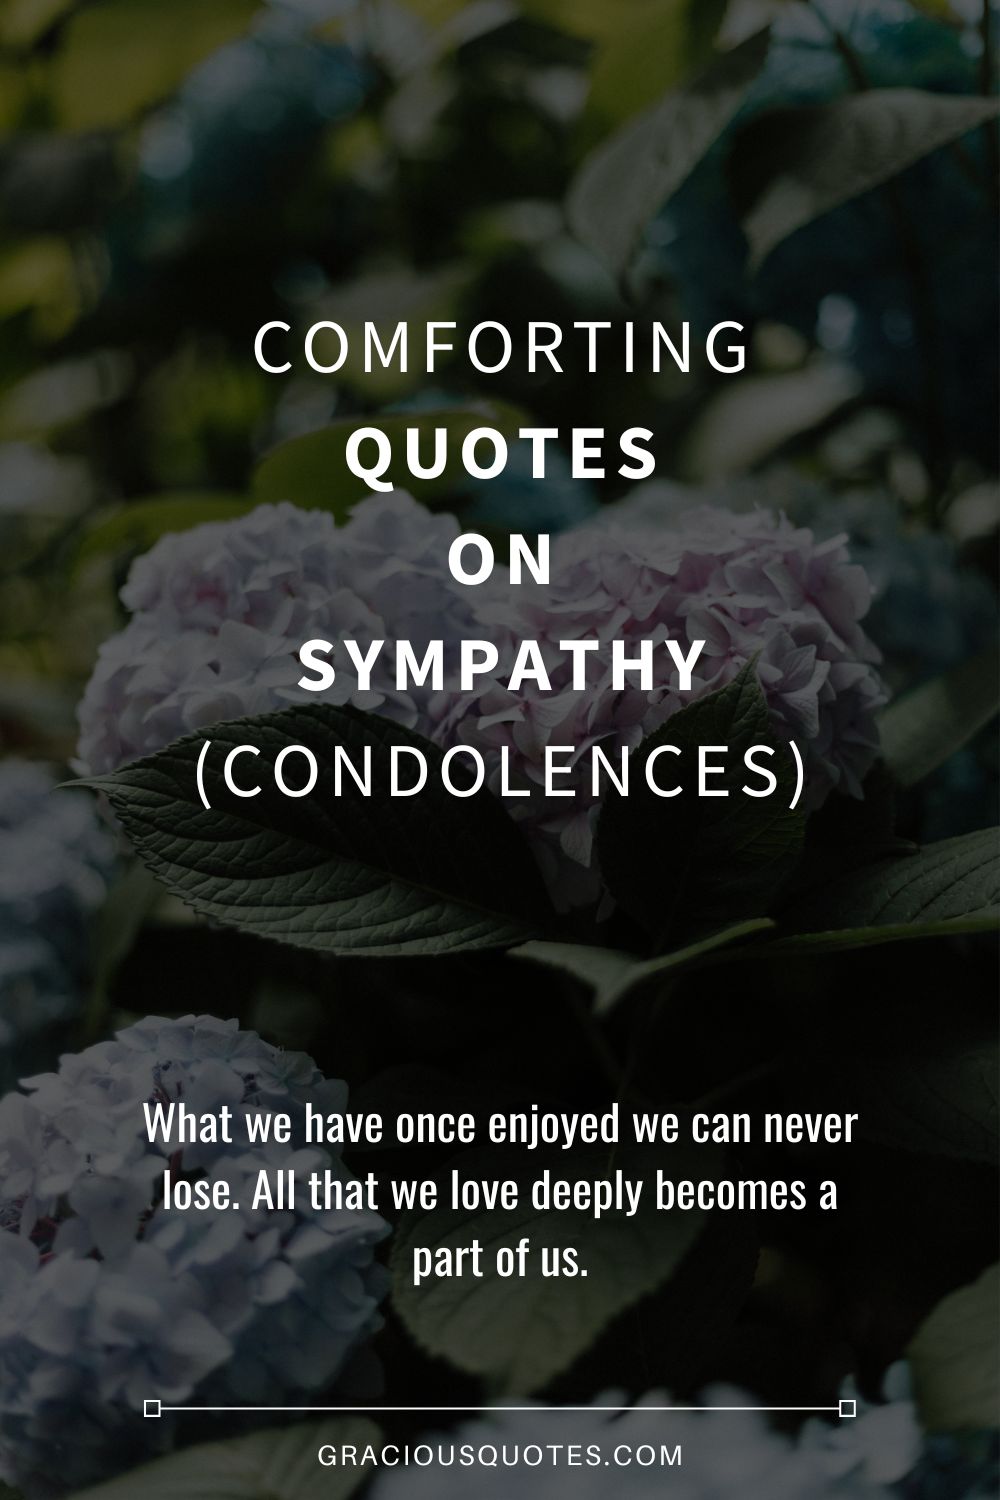 Comforting Quotes on Sympathy (CONDOLENCES) - Gracious Quotes